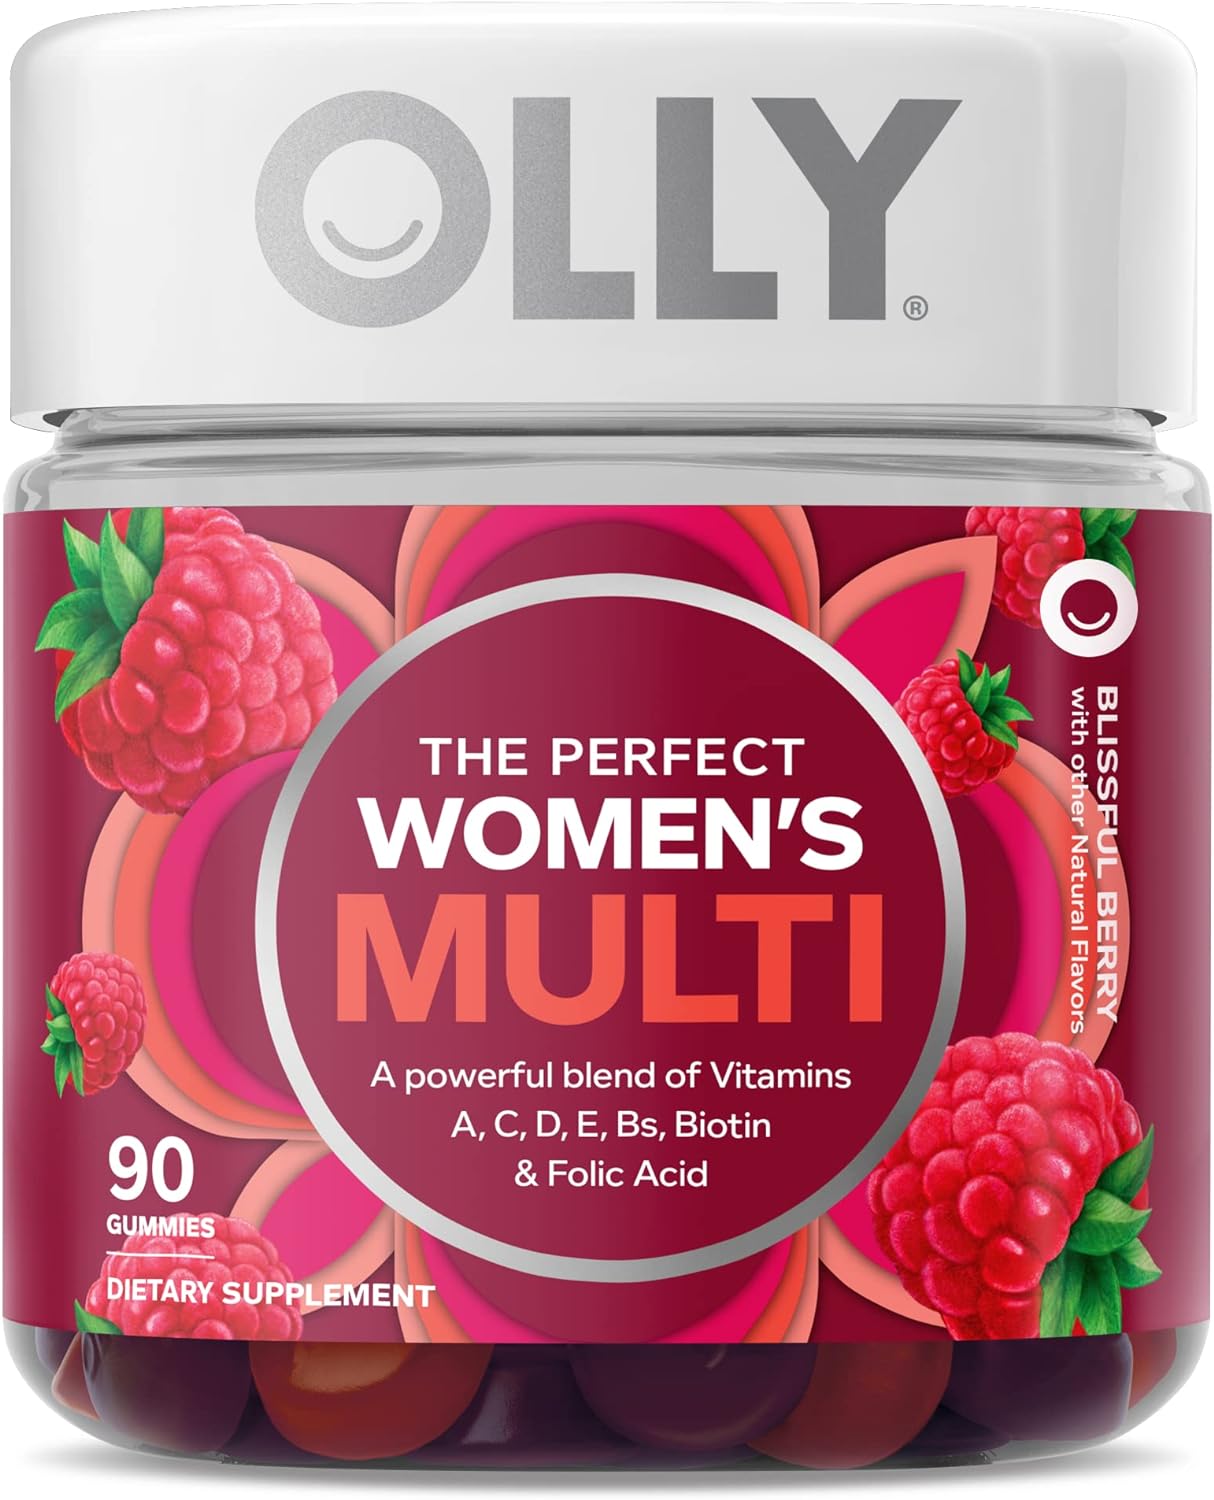 OLLY Women’s Multivitamin Gummy Review